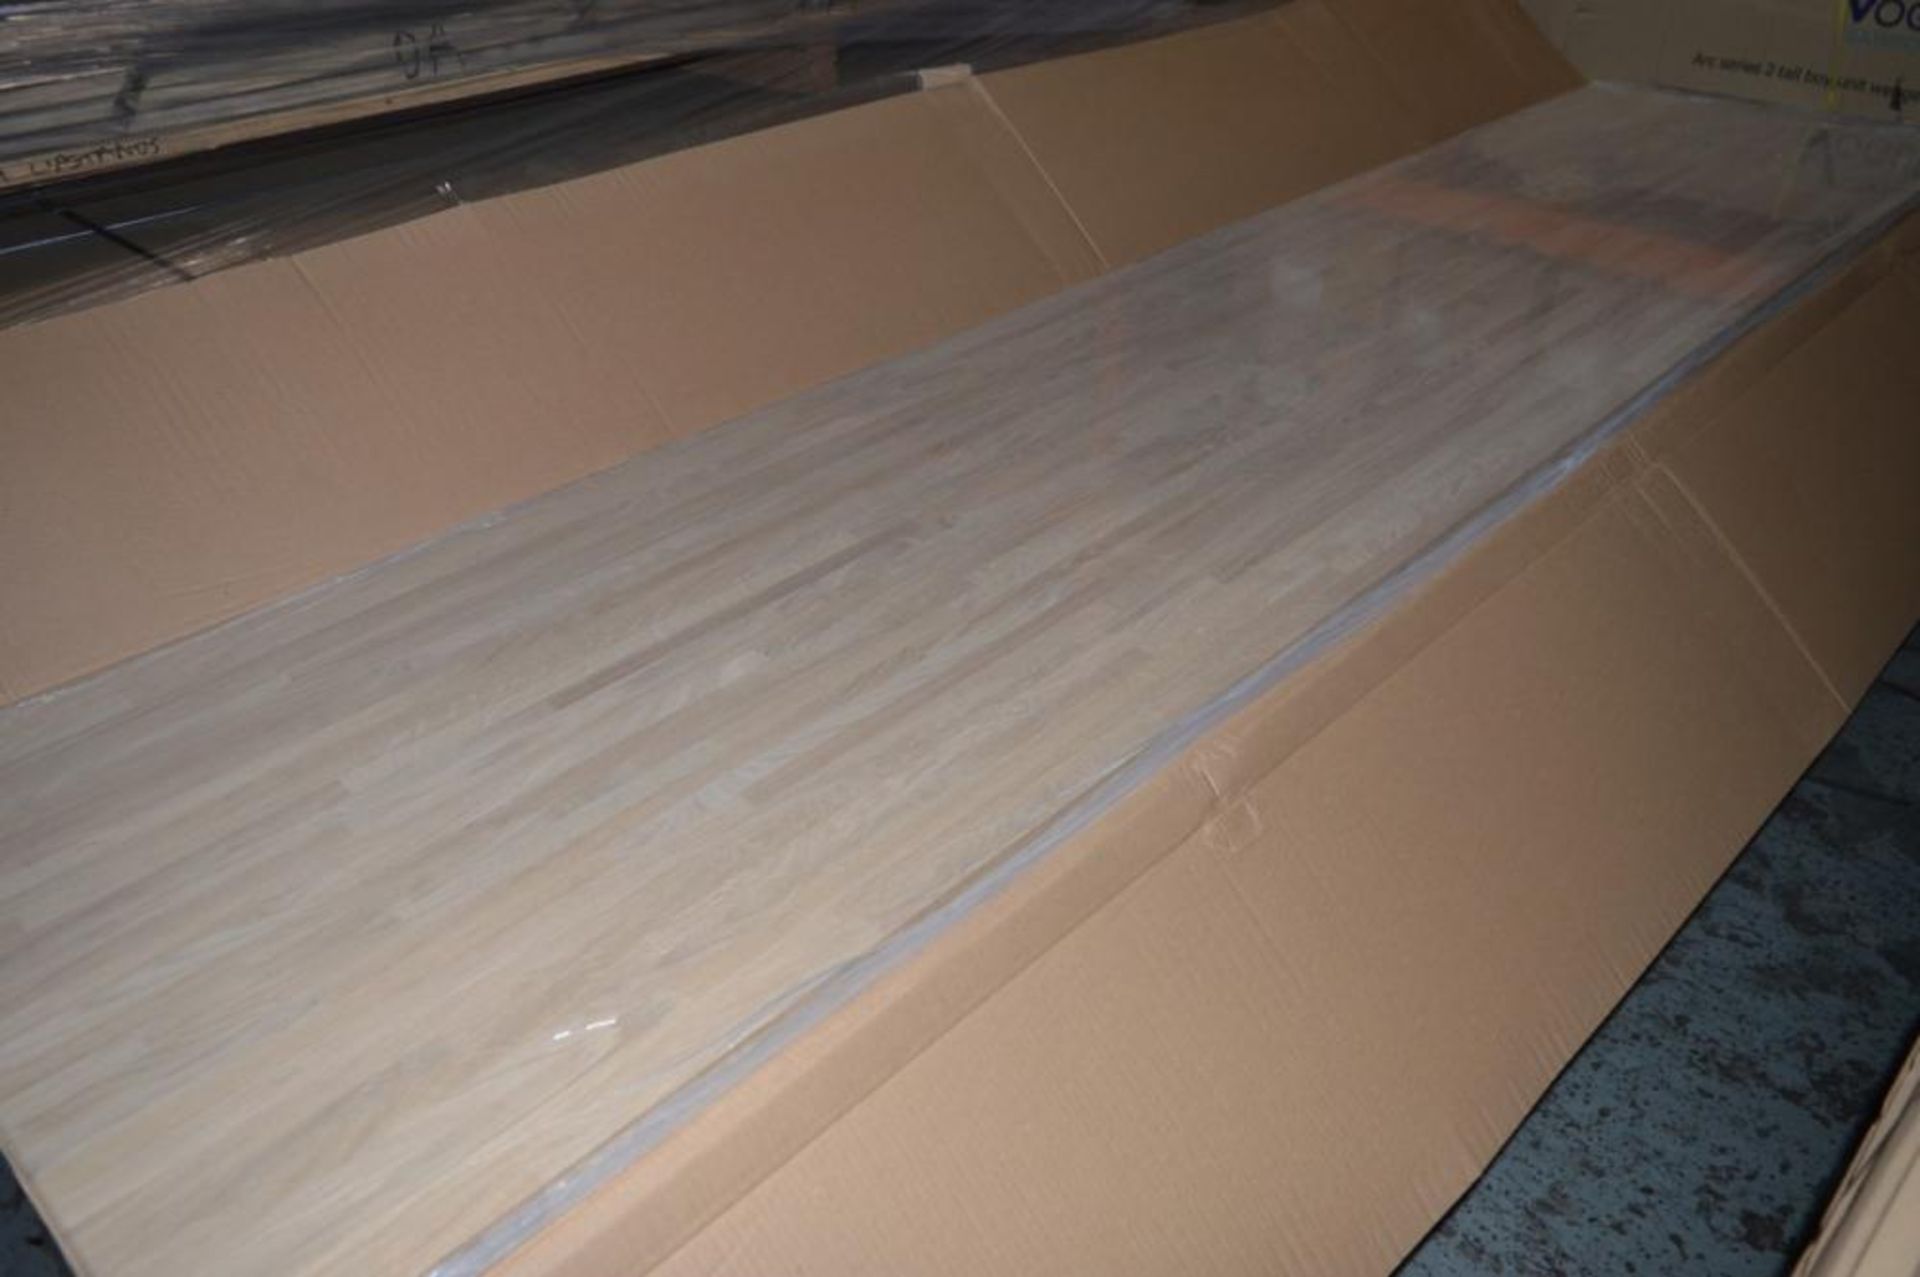 1 x Solid Wood Kitchen Worktop - OAK - Oak Blockwood Kitchen Worktop - Size: 3000 x 900 x 32mm - - Image 2 of 2